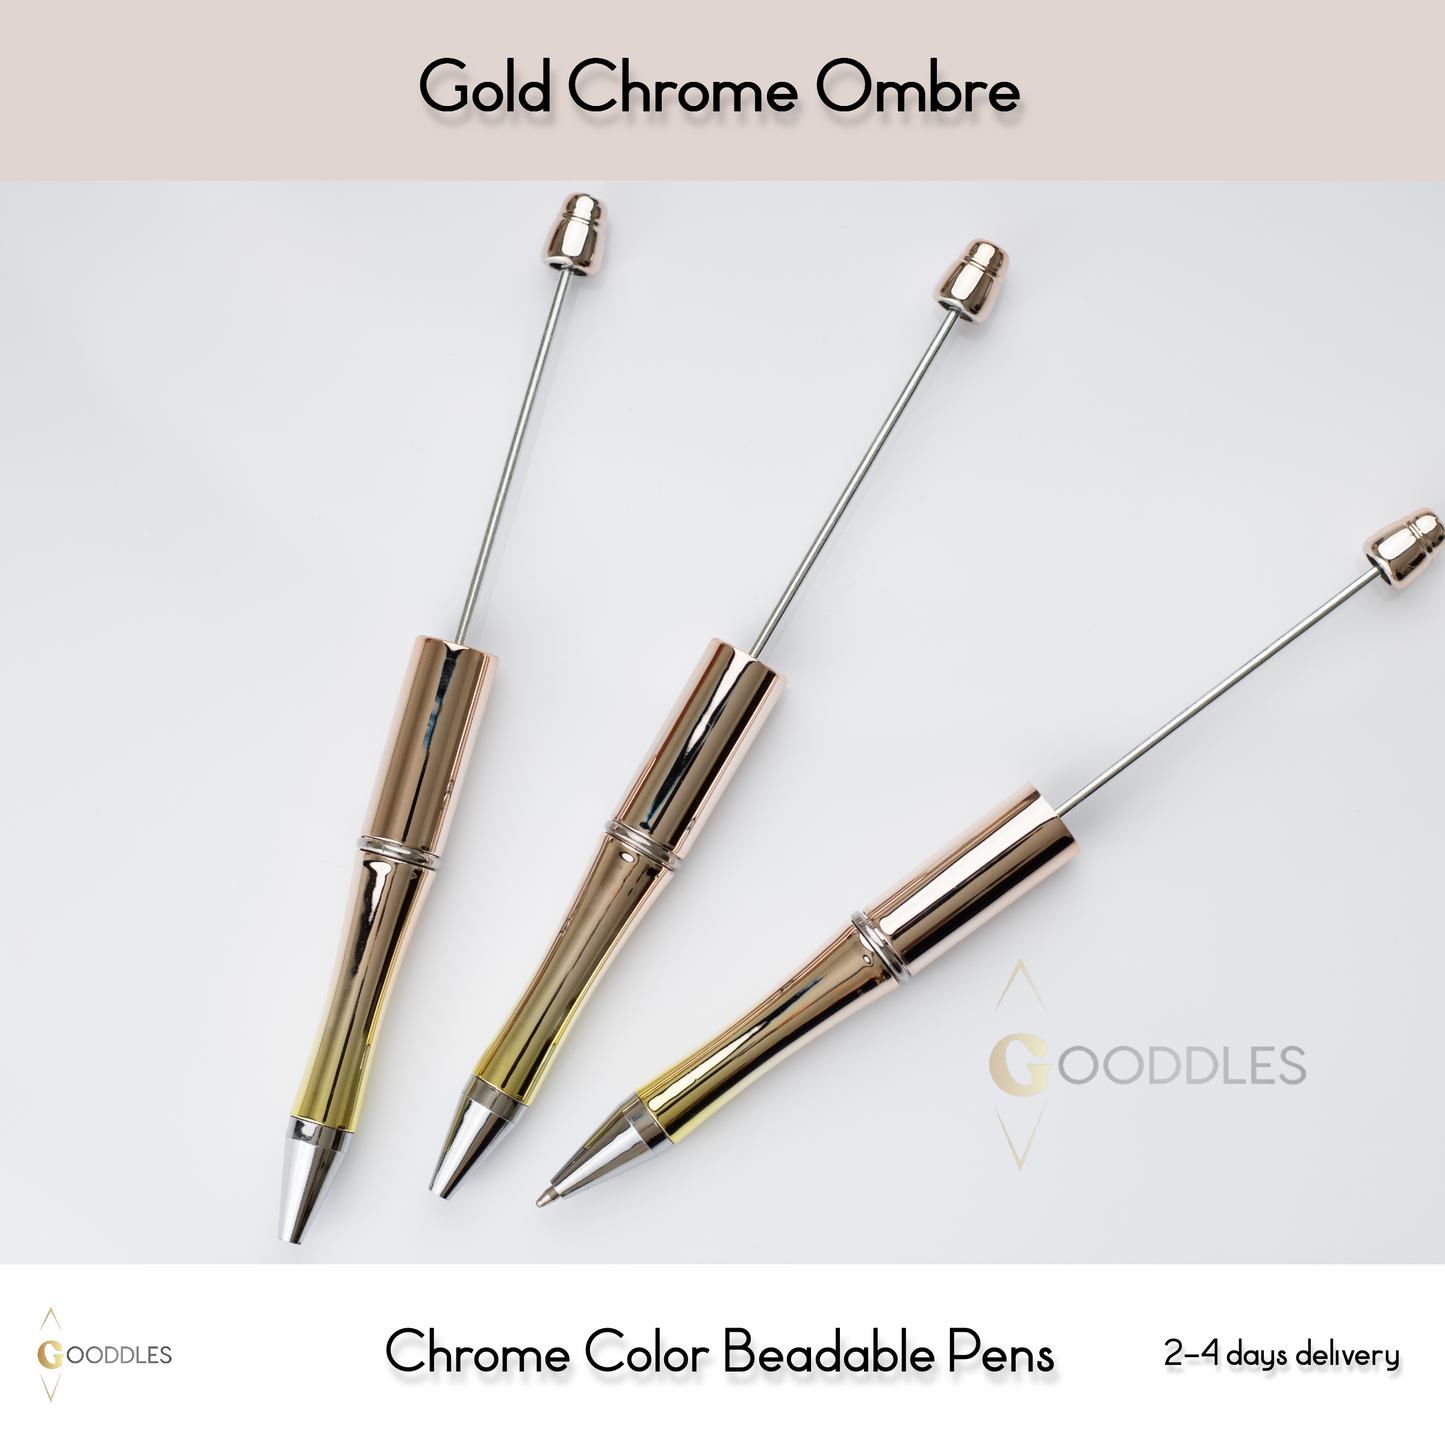 Gold Chrome Ombre Pens